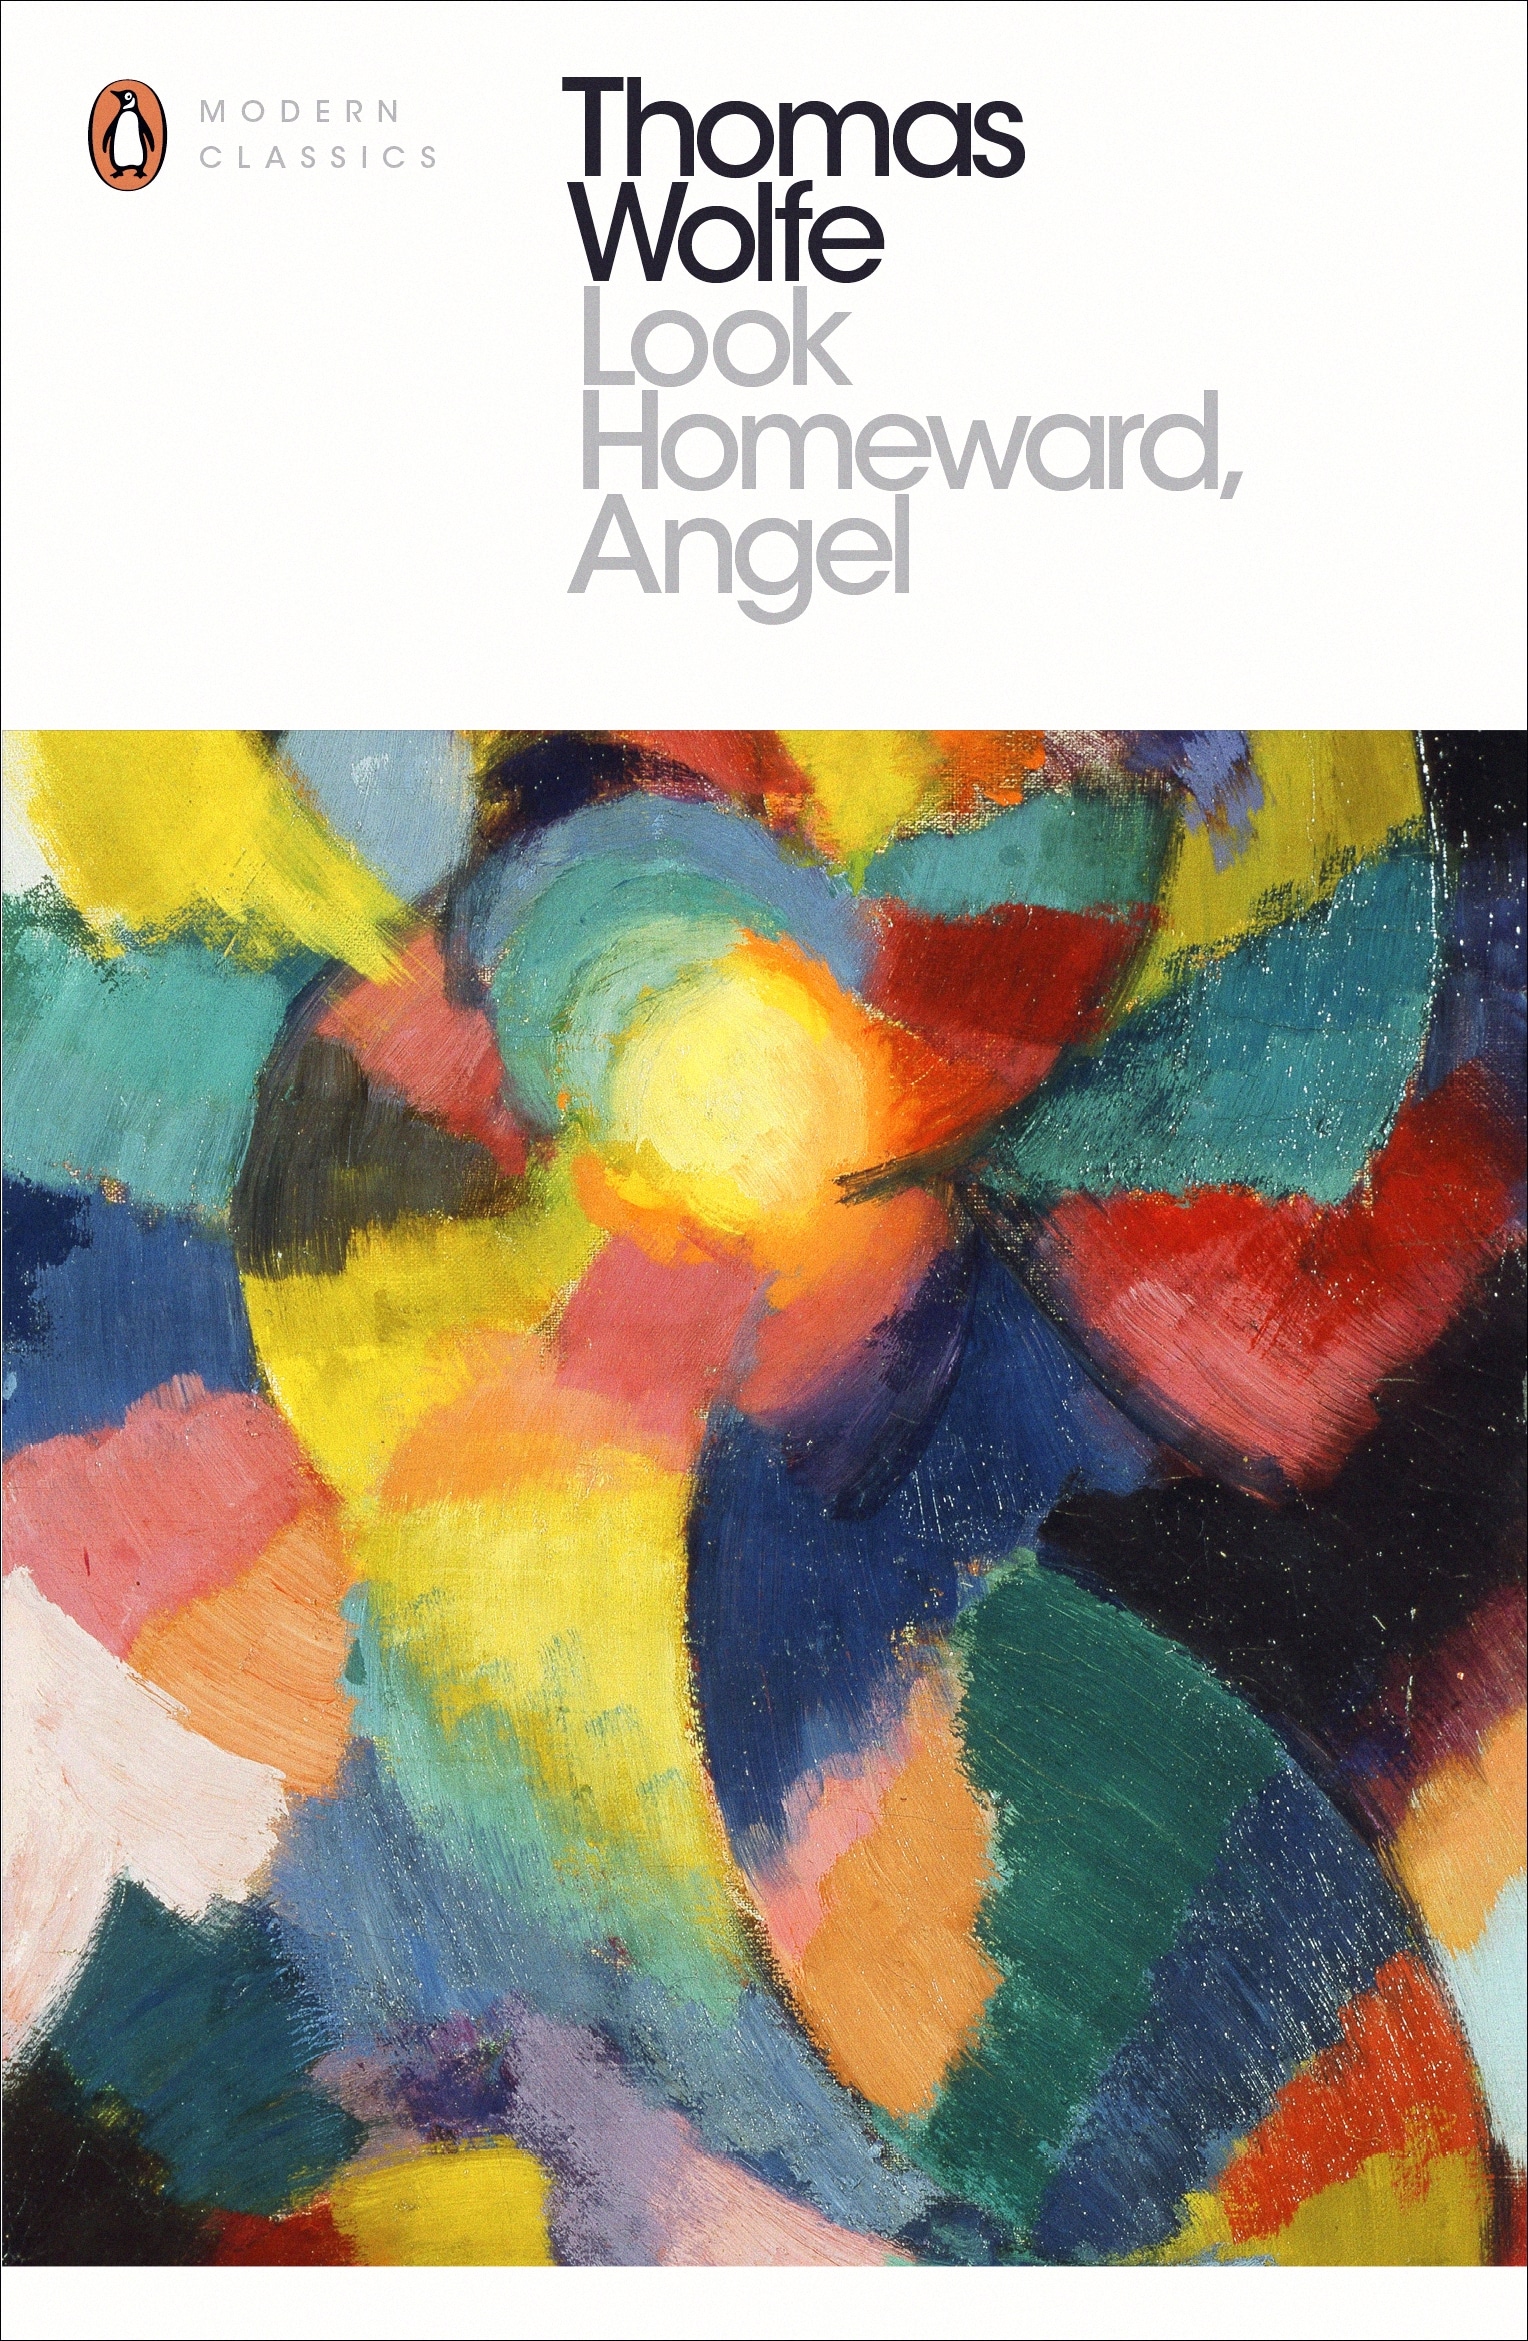 Book “Look Homeward, Angel” by Thomas Wolfe, Elizabeth Kostova — February 4, 2016